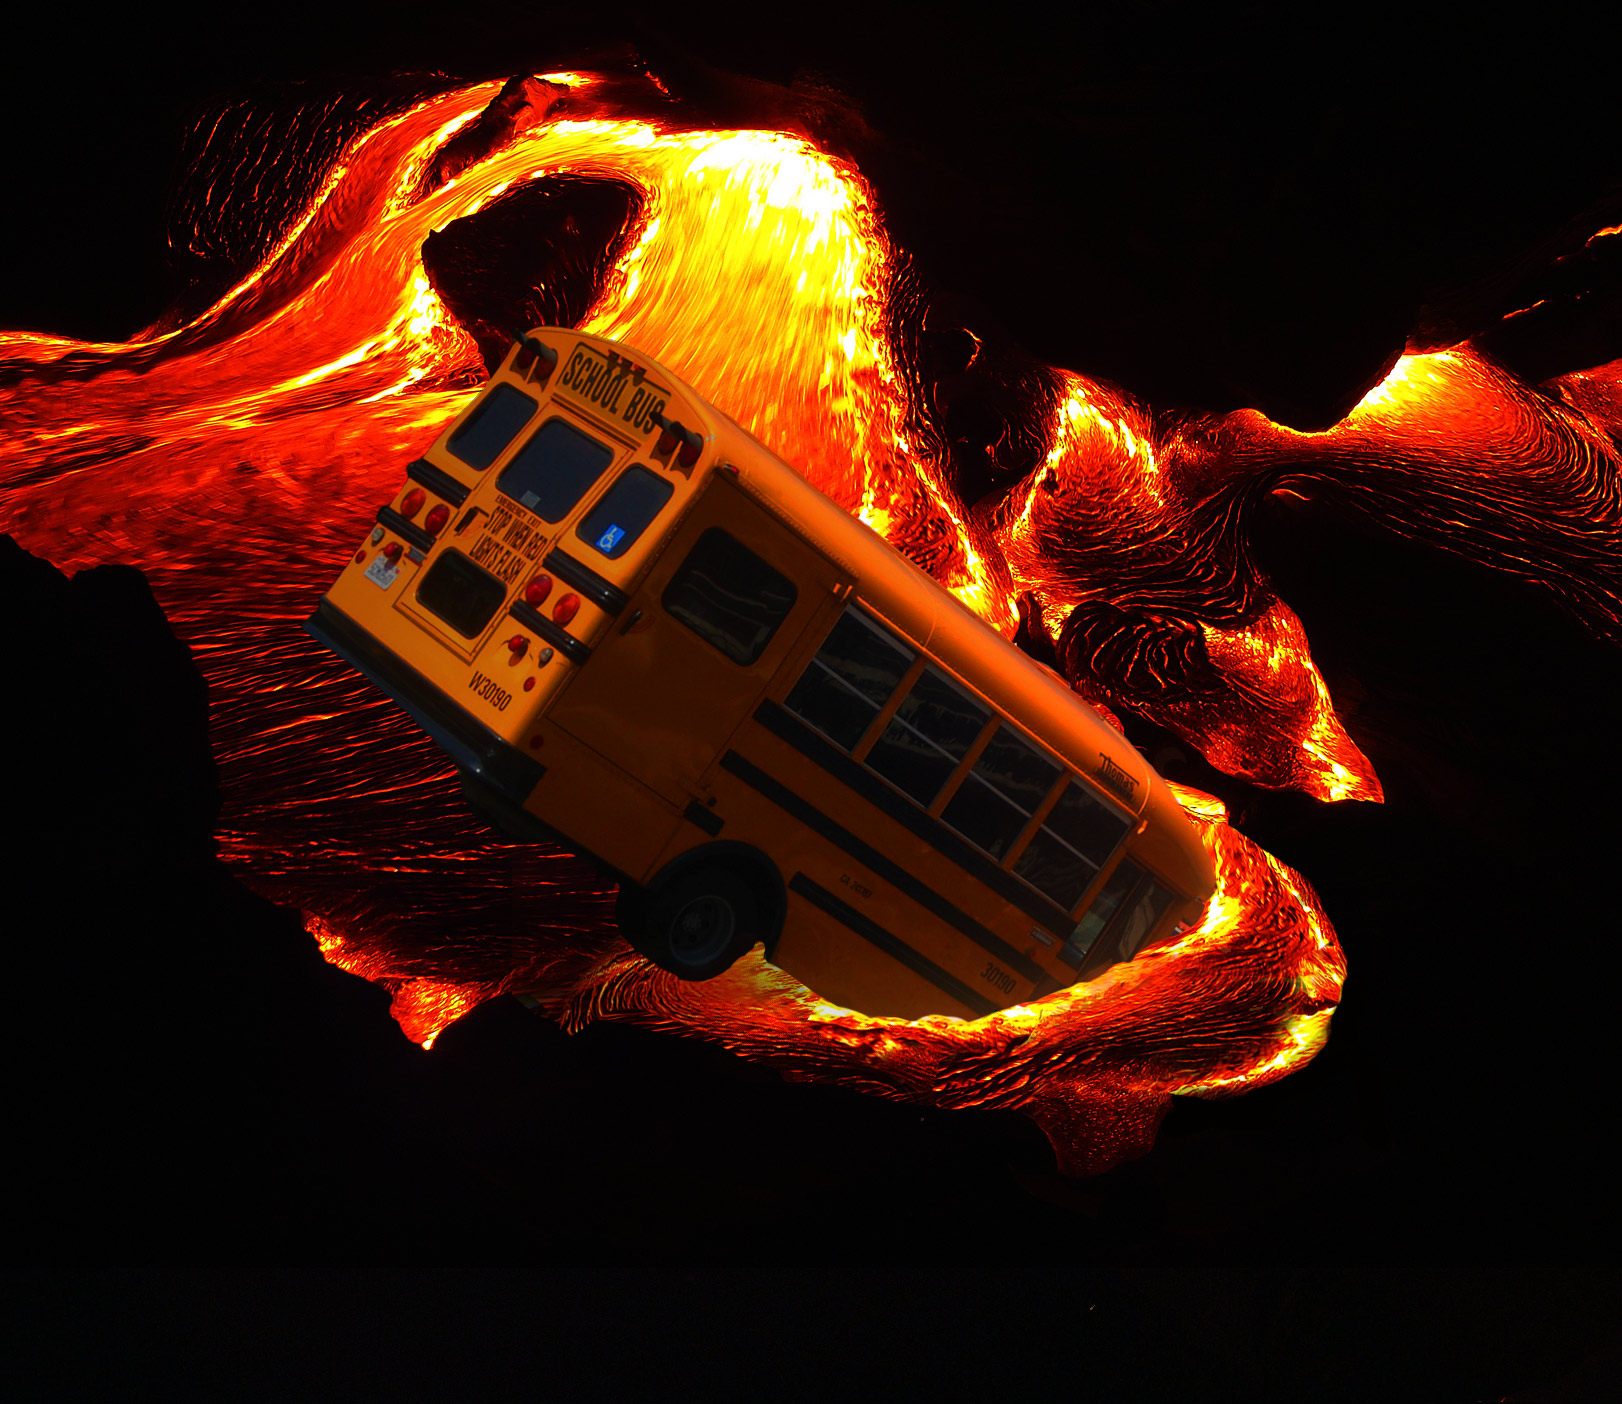 Beaverton Not-So-Magic Bus Meets Volcano